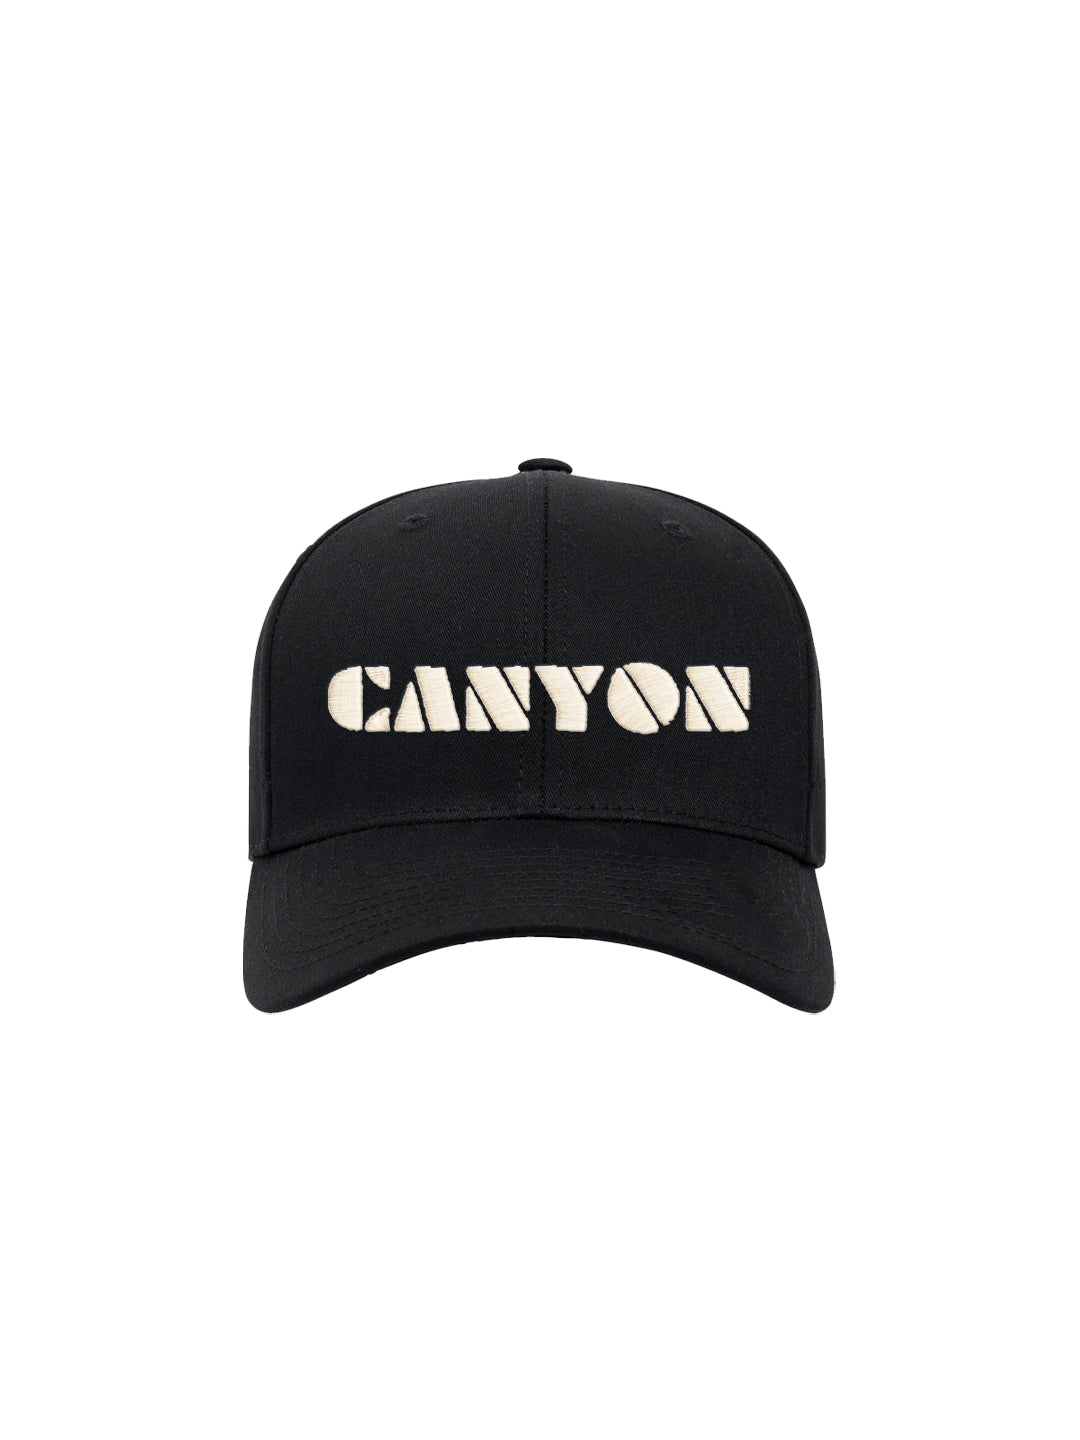 Canyon Block Twill Trucker in Black